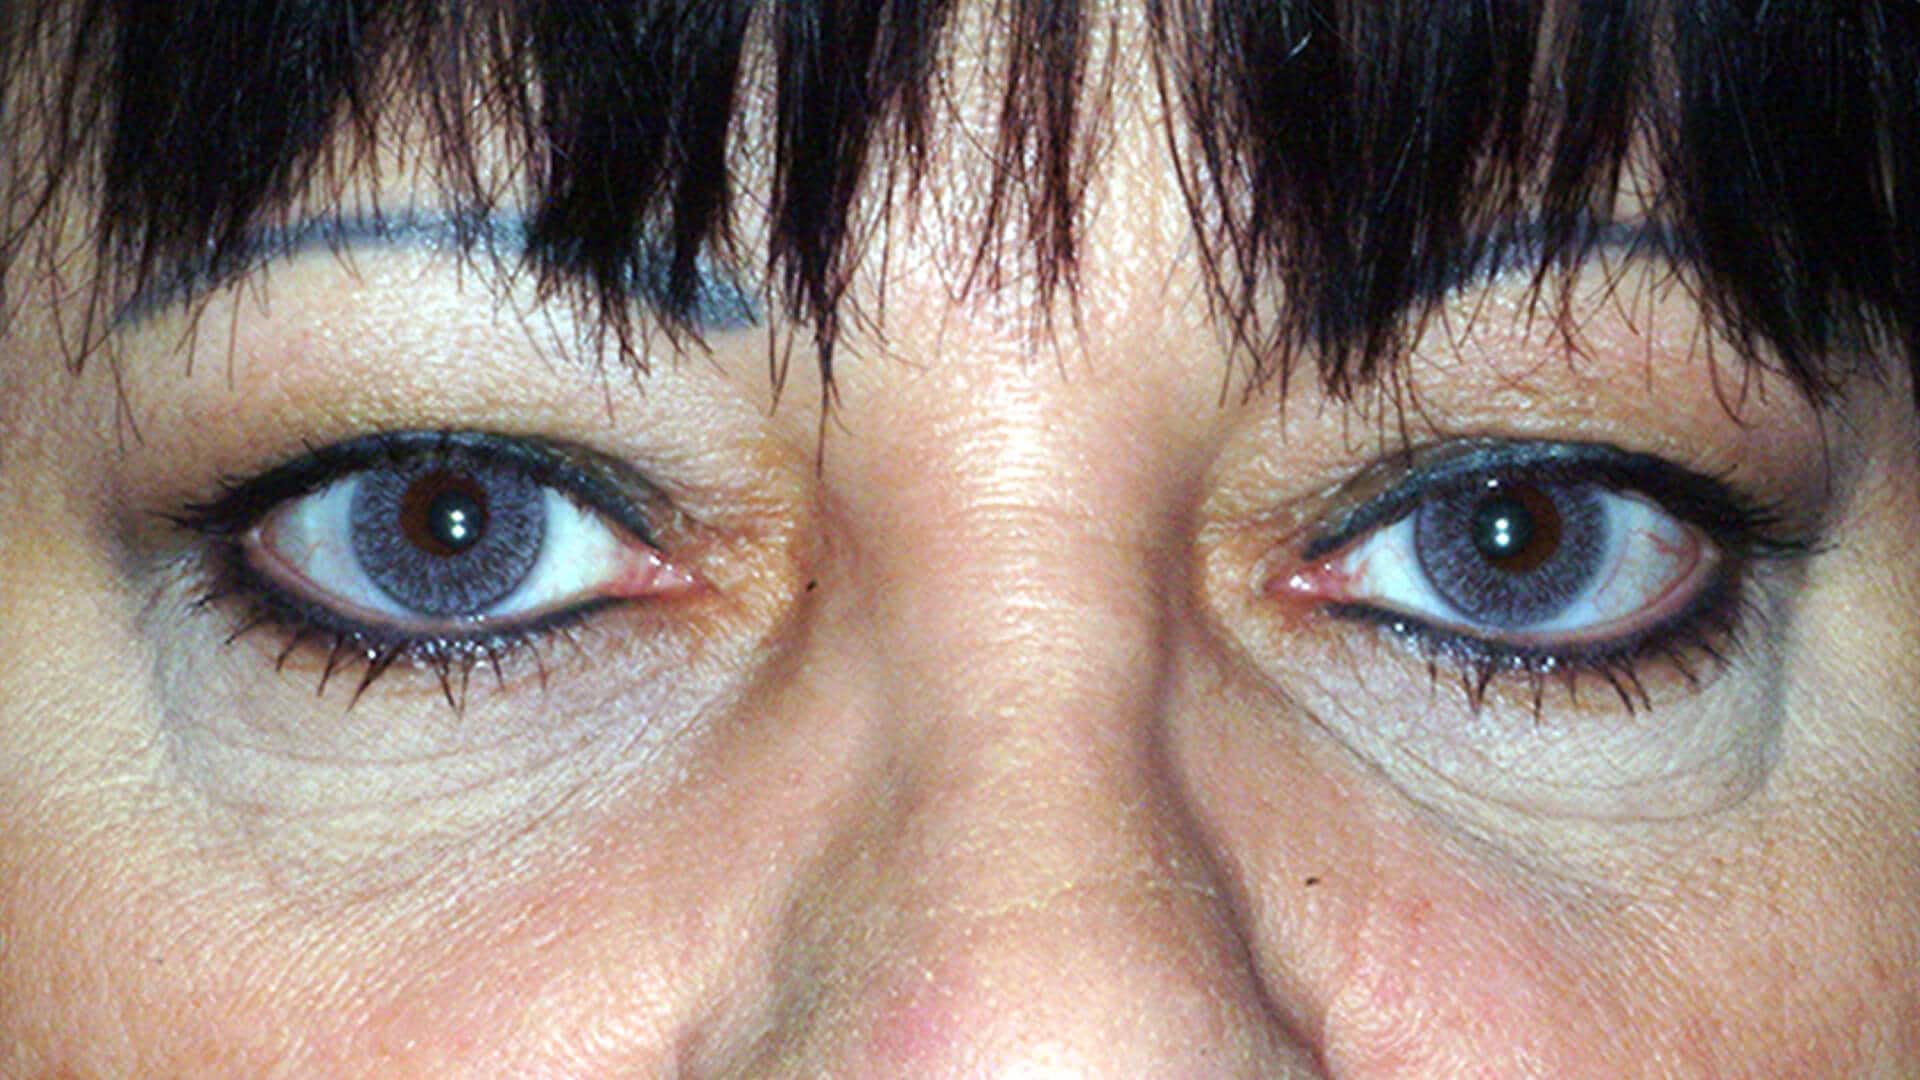 Case 38575 Blepharoplasty Upper Eyelid Tightening Before